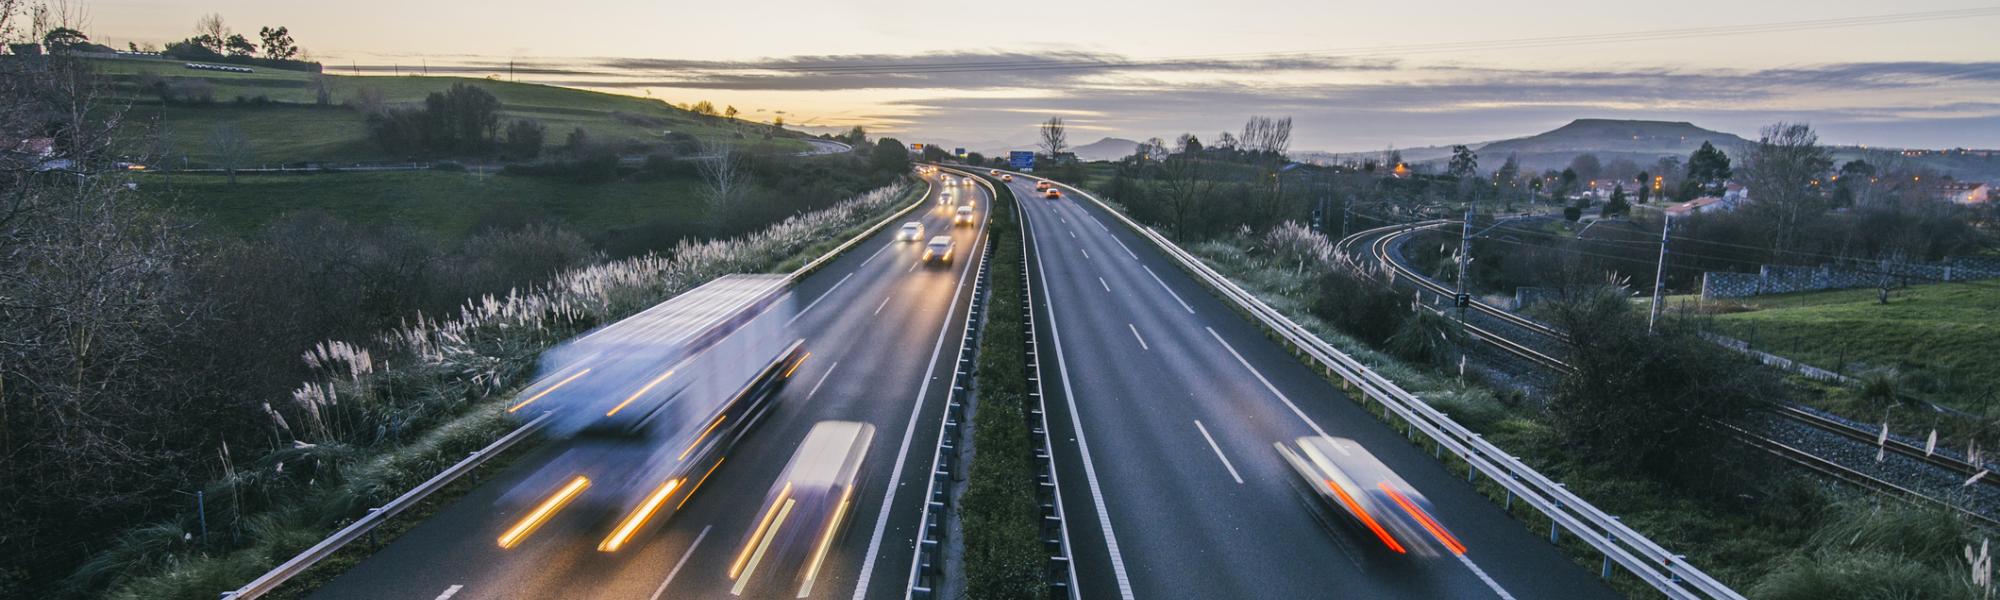 e-CMR: Going digital in road transport